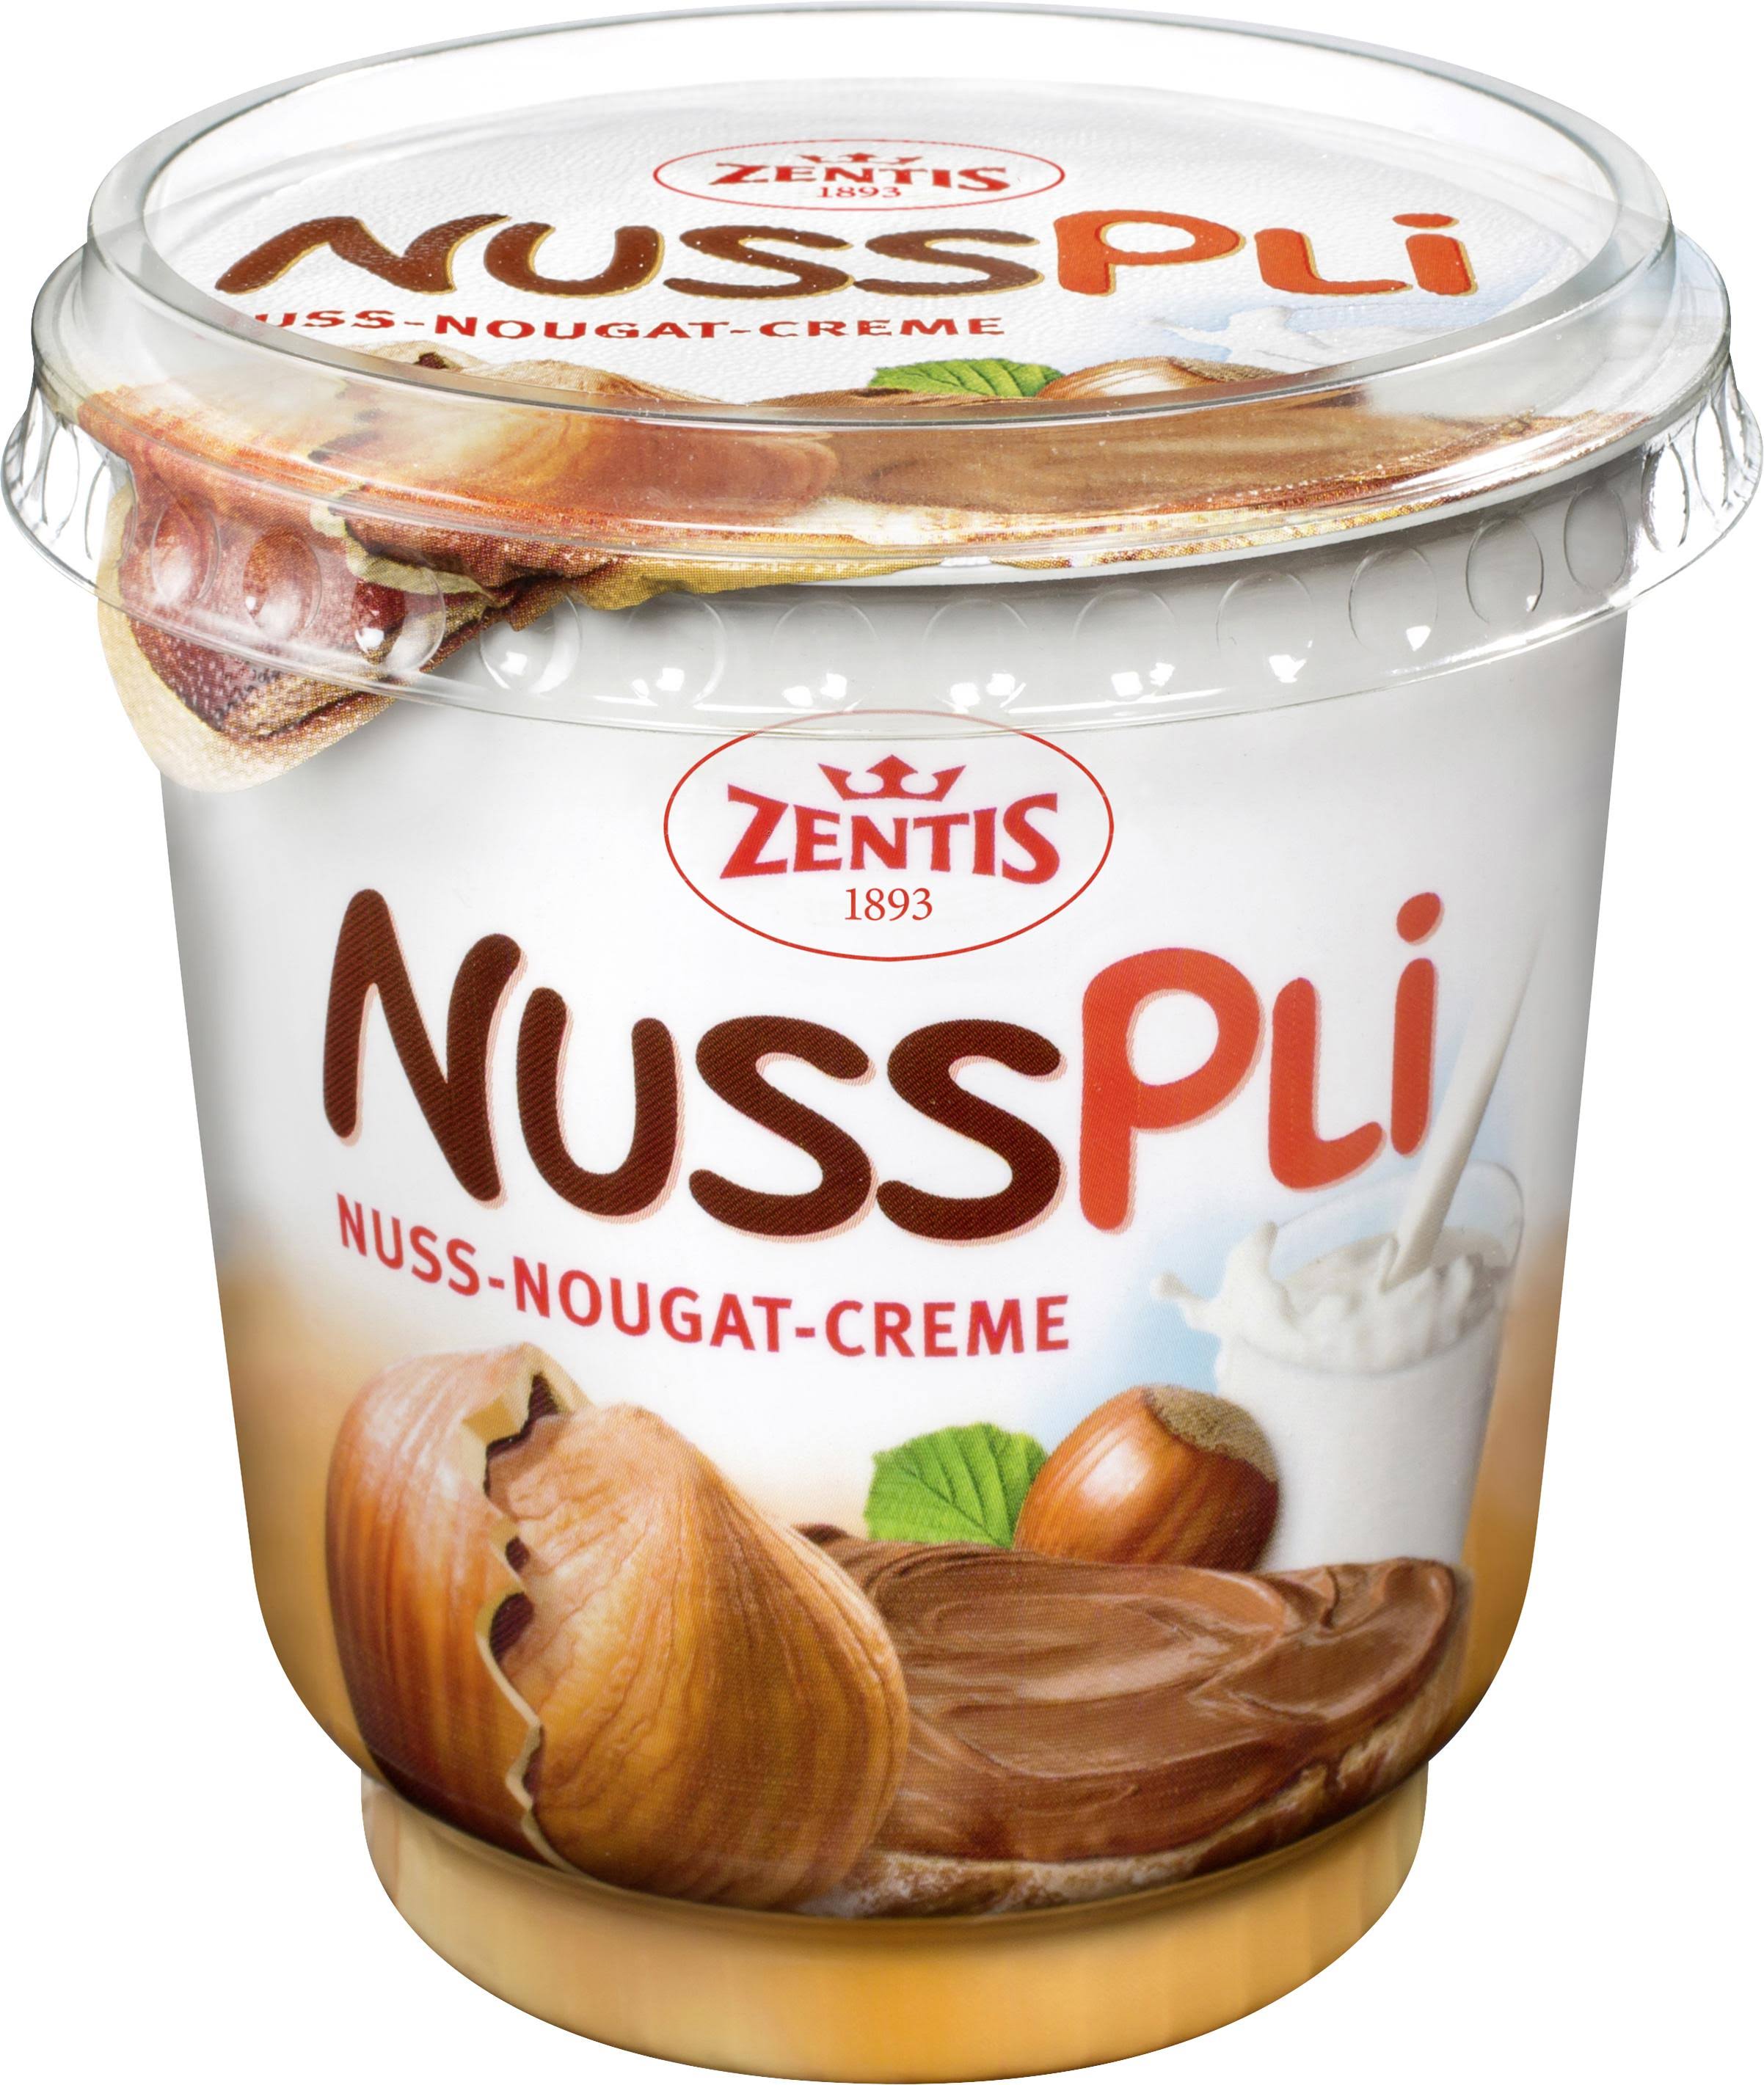 Zentis Nusspli Nut Nougat Cream 400 G